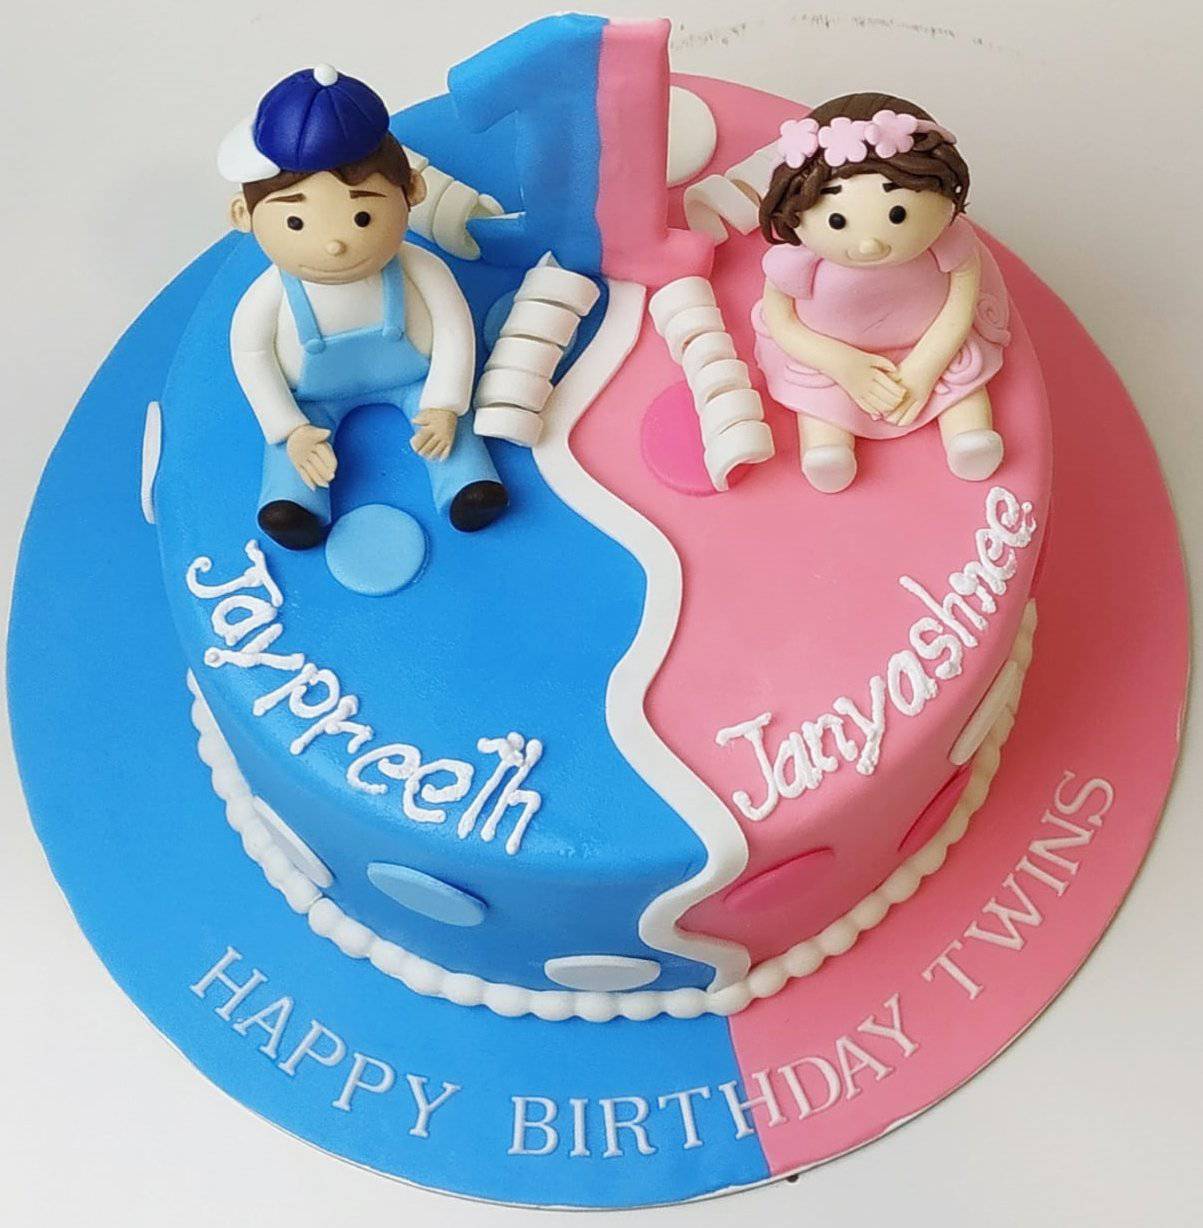 Two baby ELEPHANTS figurines edible handmade birthday cake topper twins  siblings | eBay